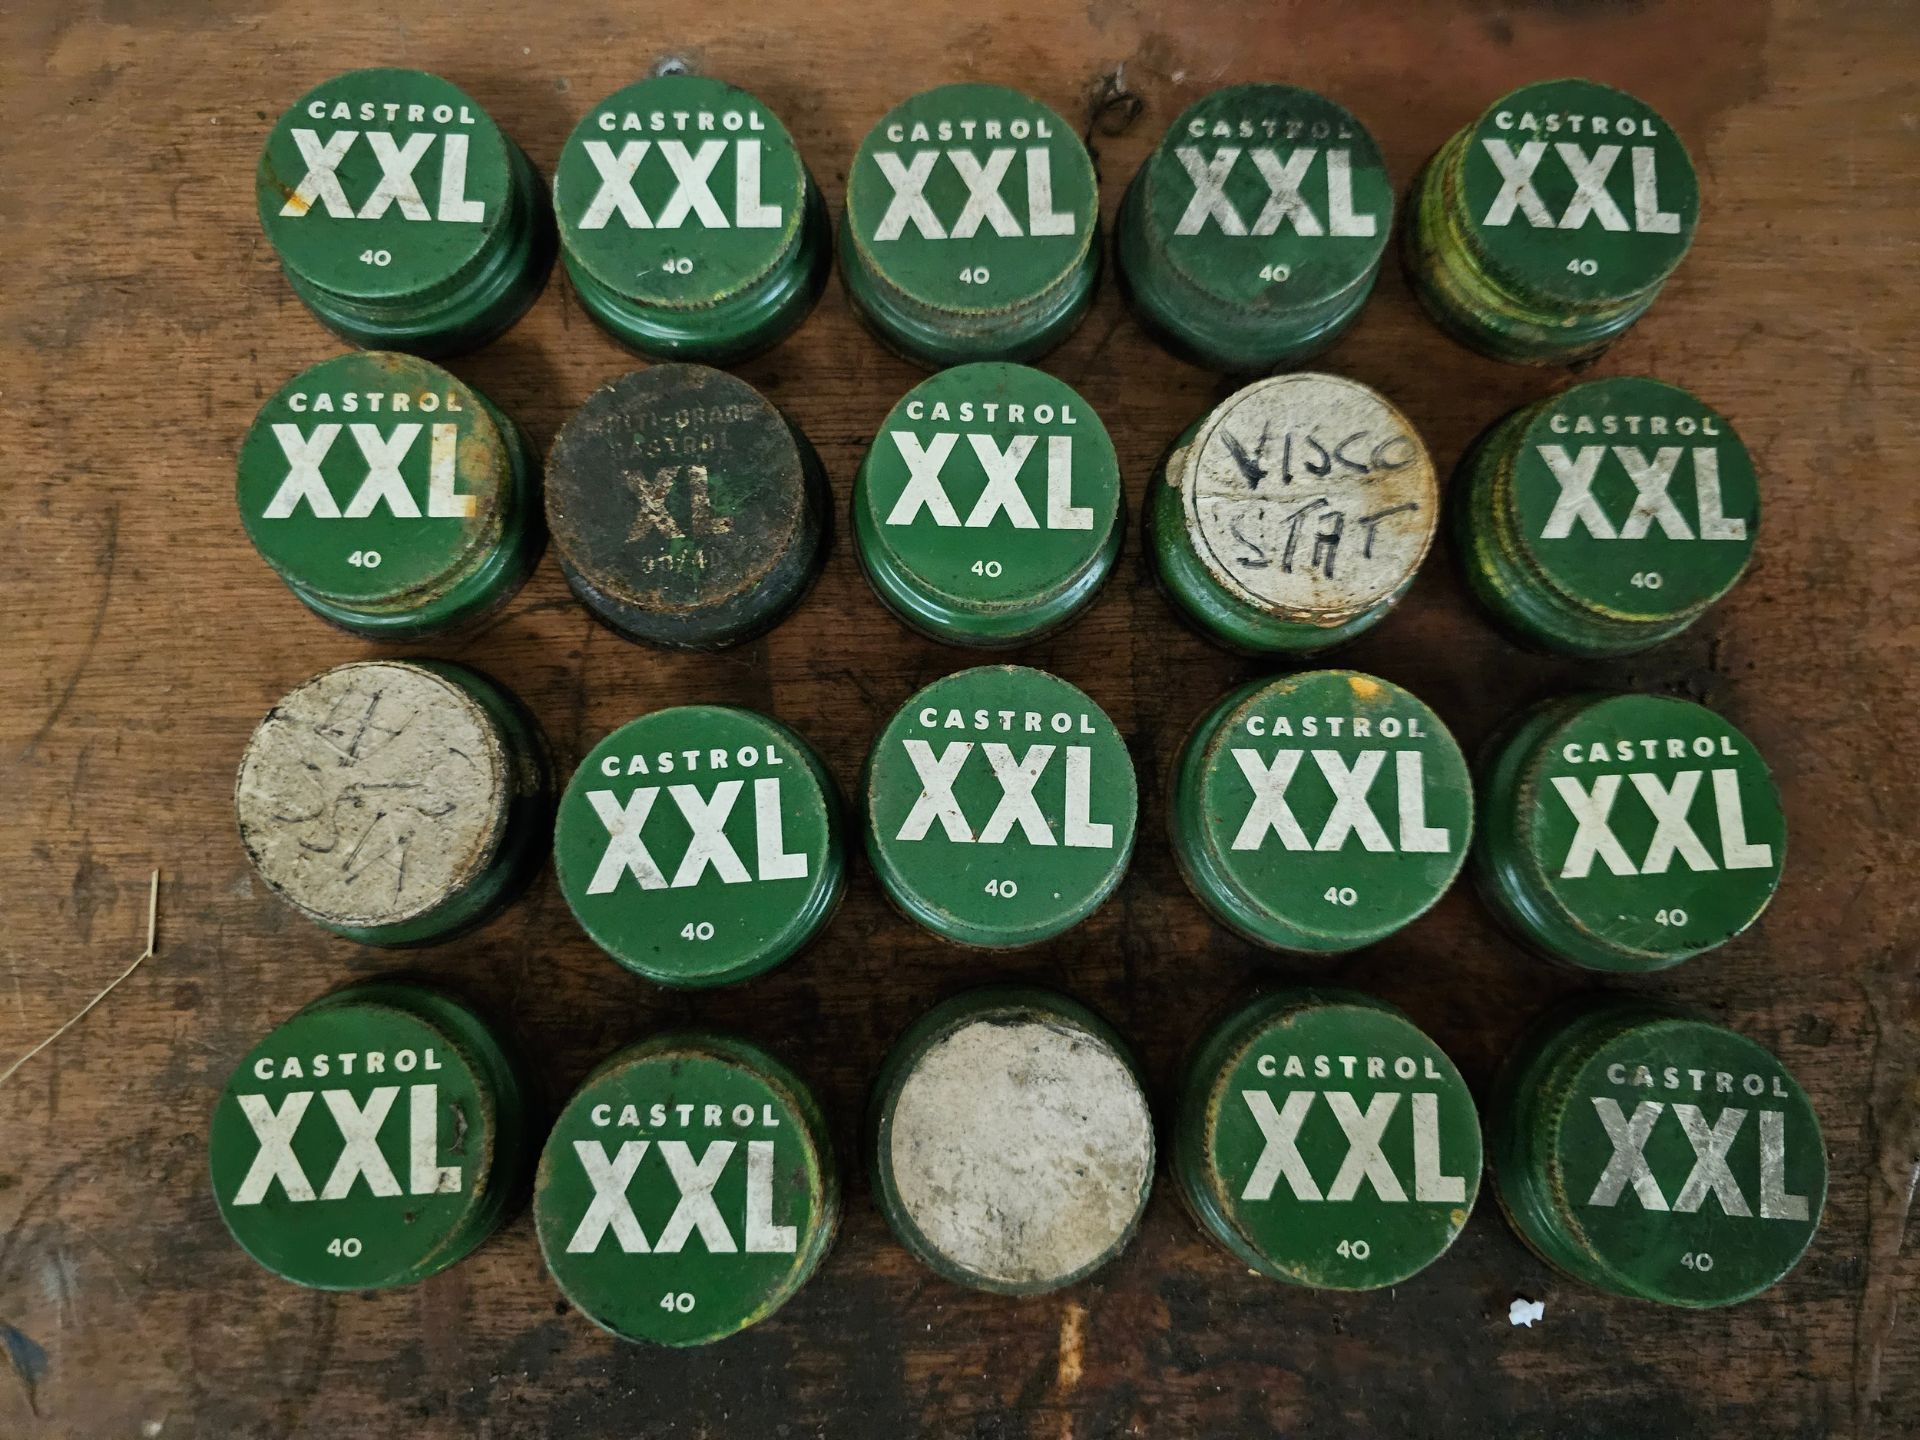 20 Castrol XXL one pint glass bottle caps